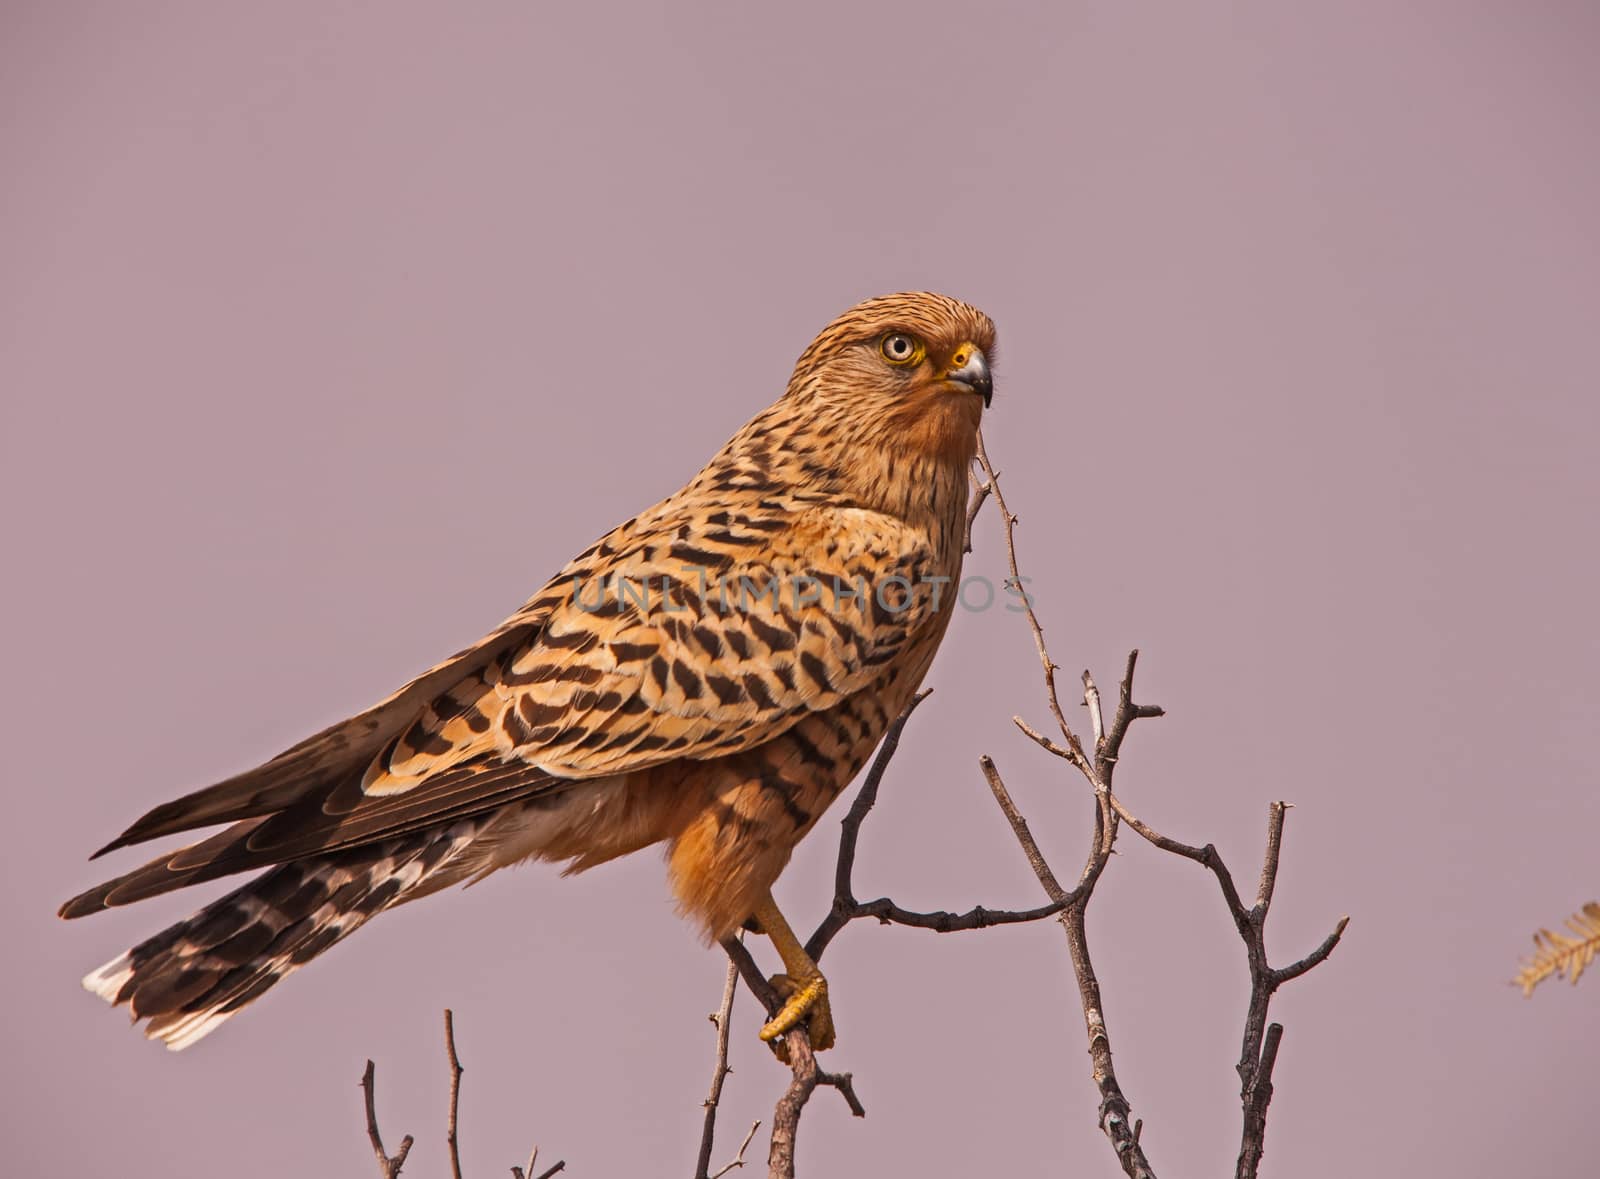 Greater Kestrel (Falco rupicoloides) by kobus_peche